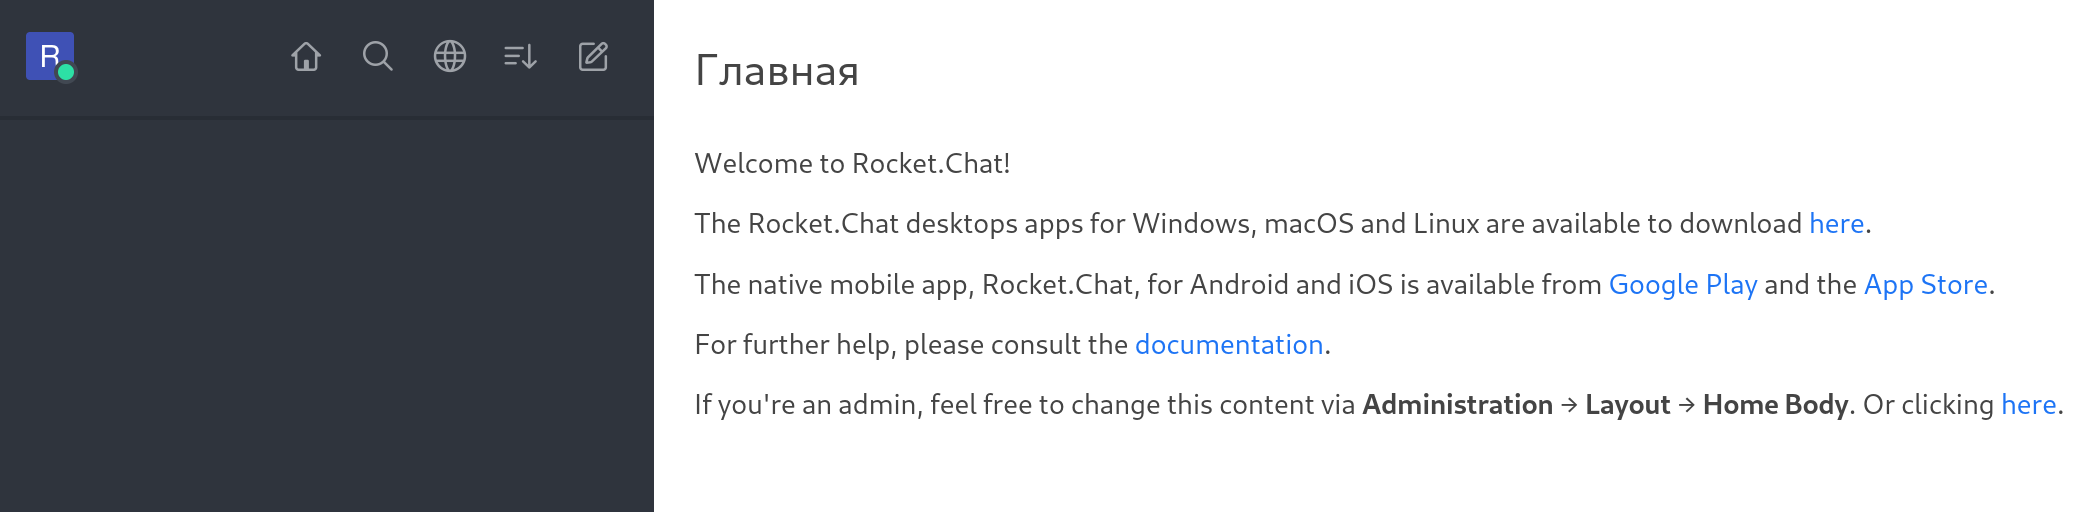 Главная панель Rocket.Chat